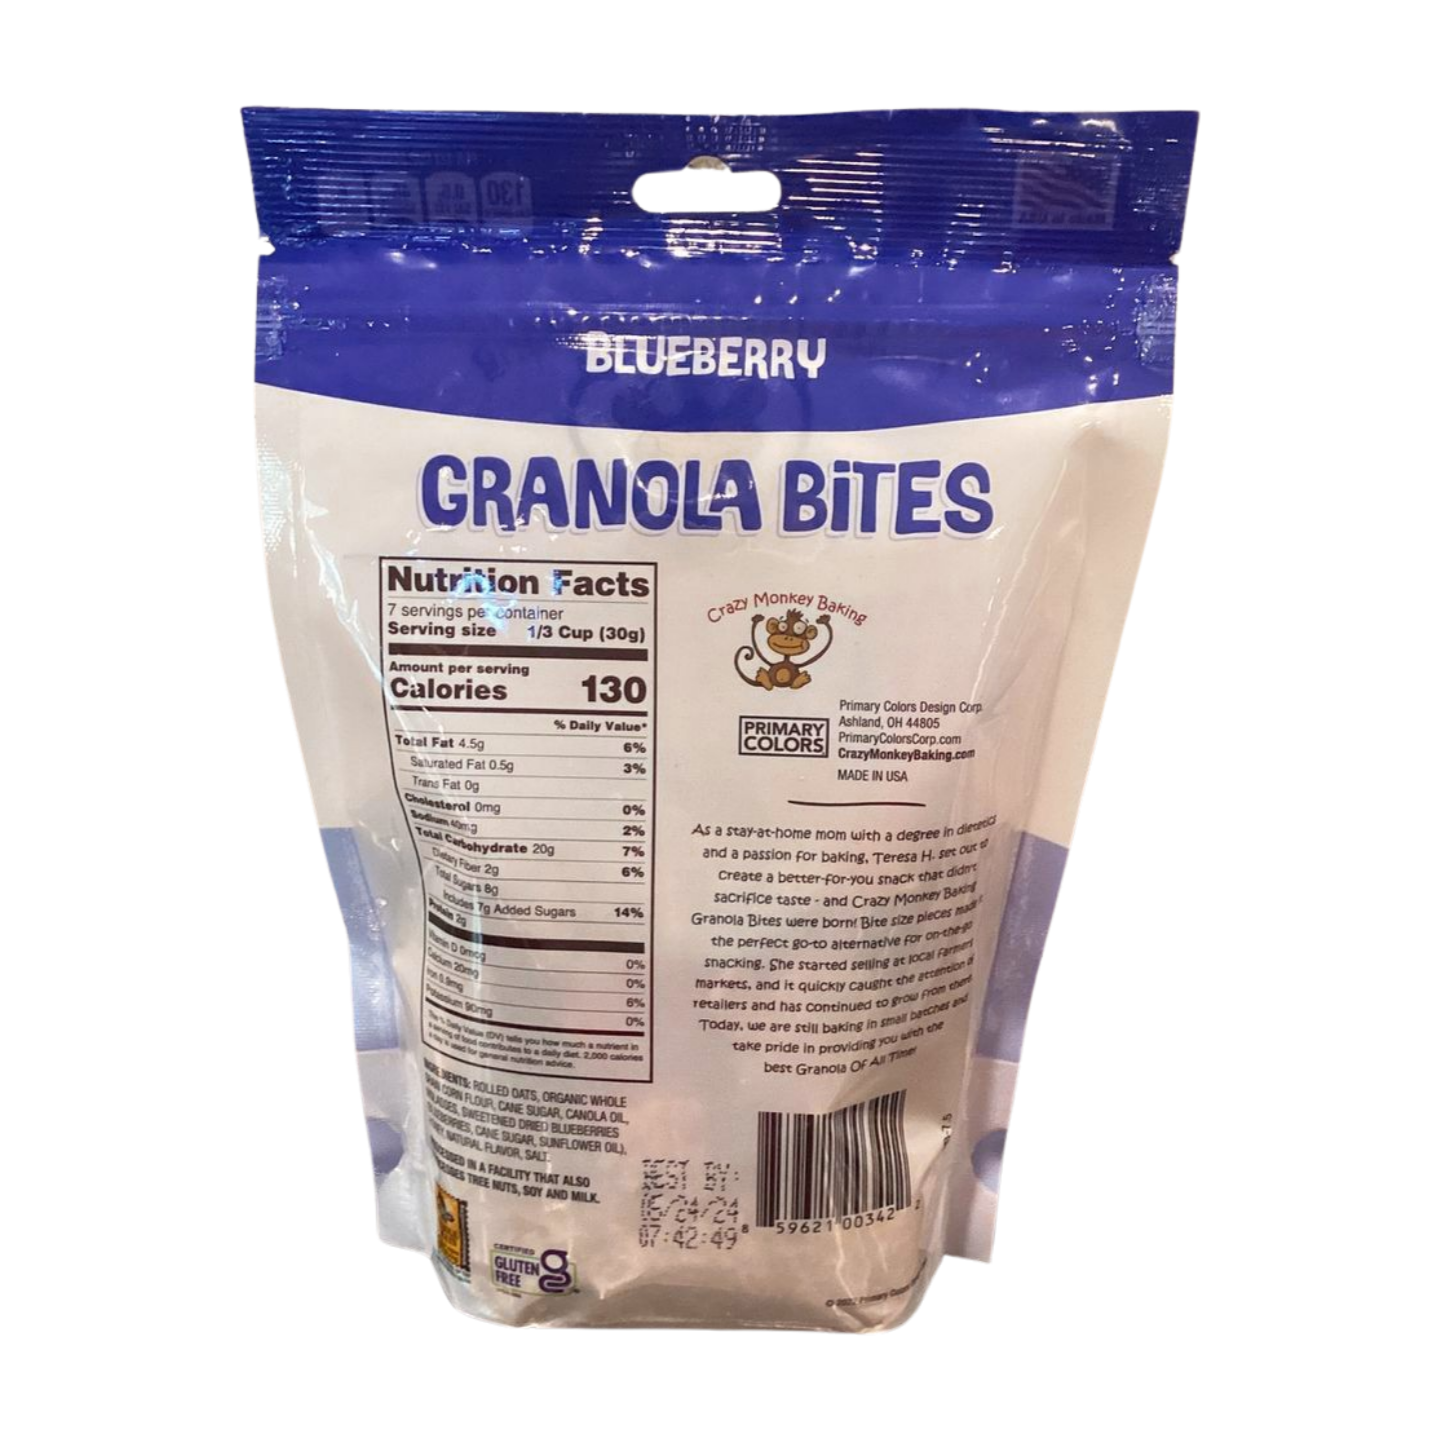 Blueberry Granola Bites